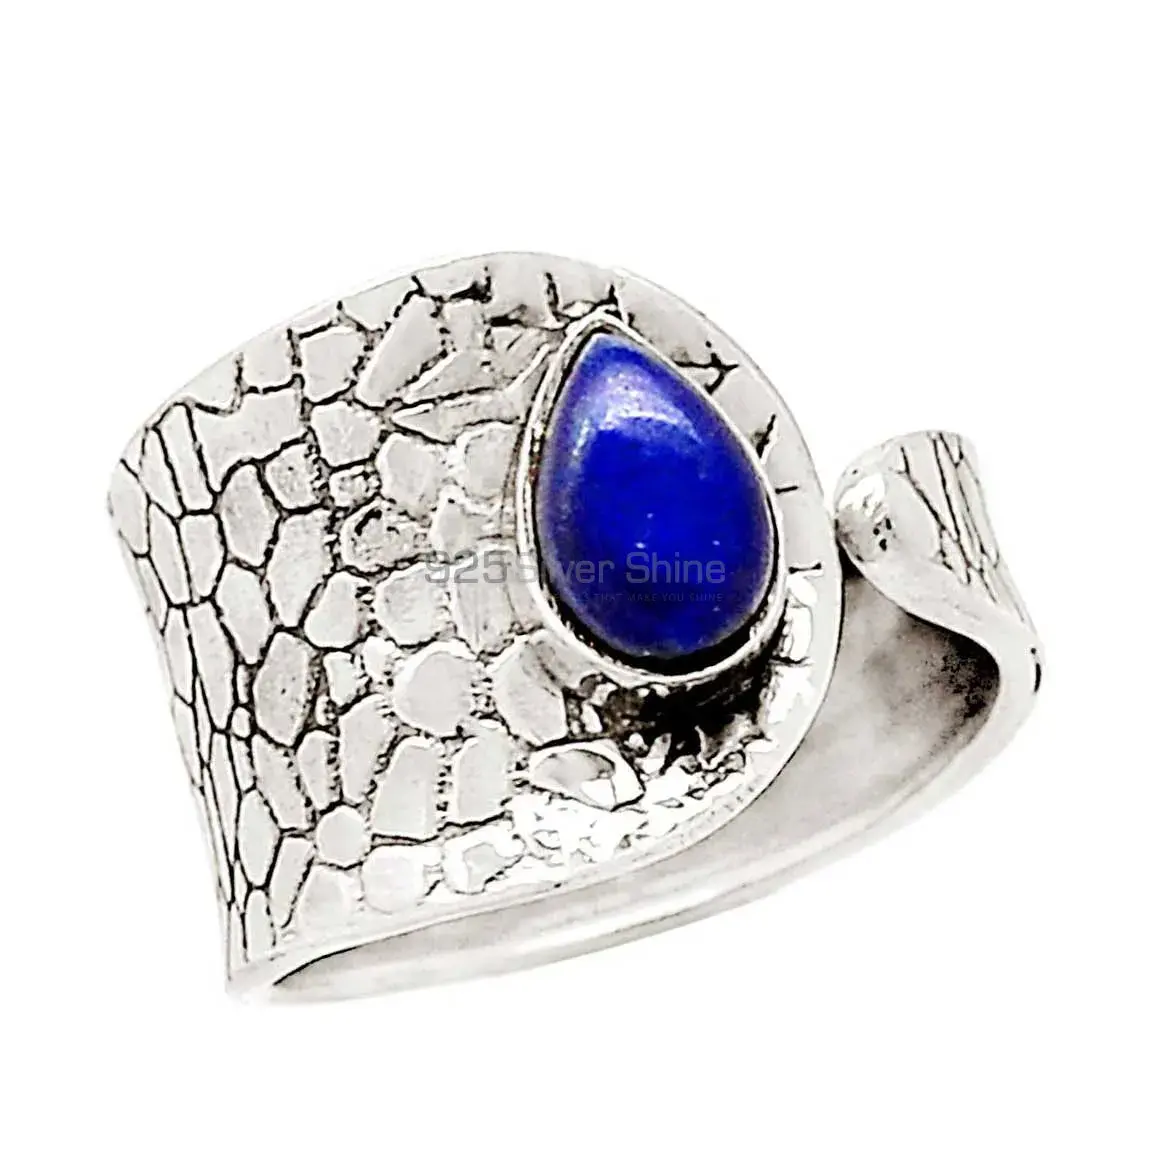 Genuine Lapis Gemstone Ring In Fine Silver Jewelry 925SR2315_0